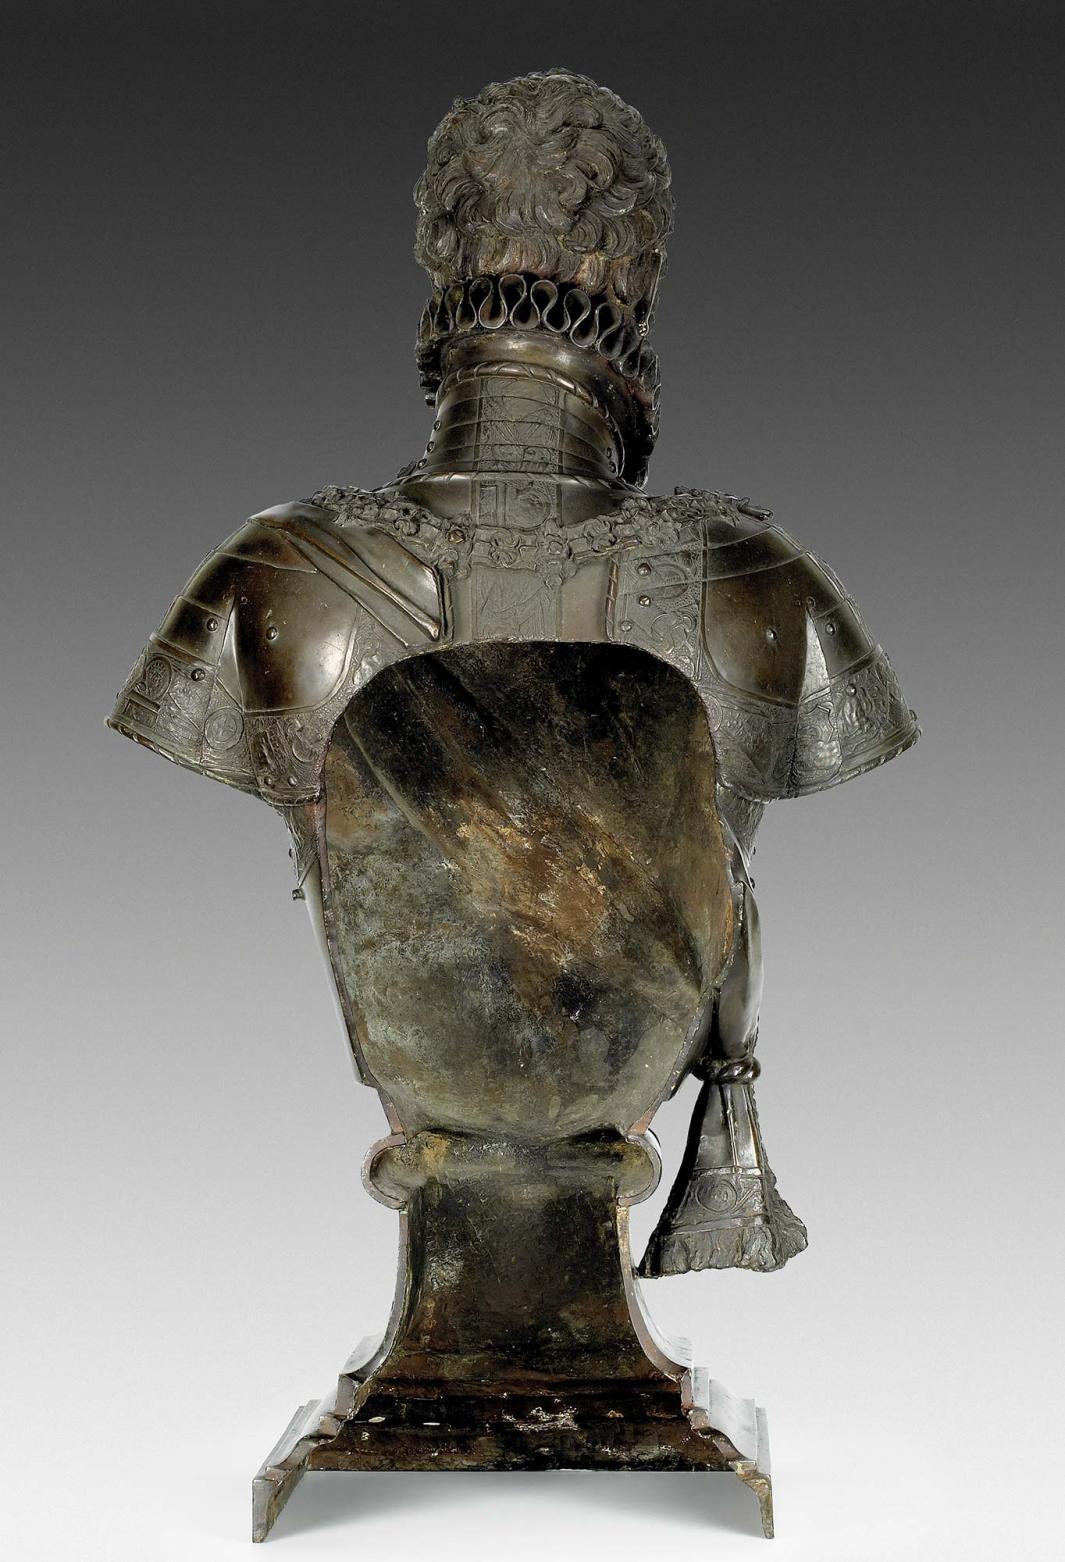 reverse of bust of bearded man in armor